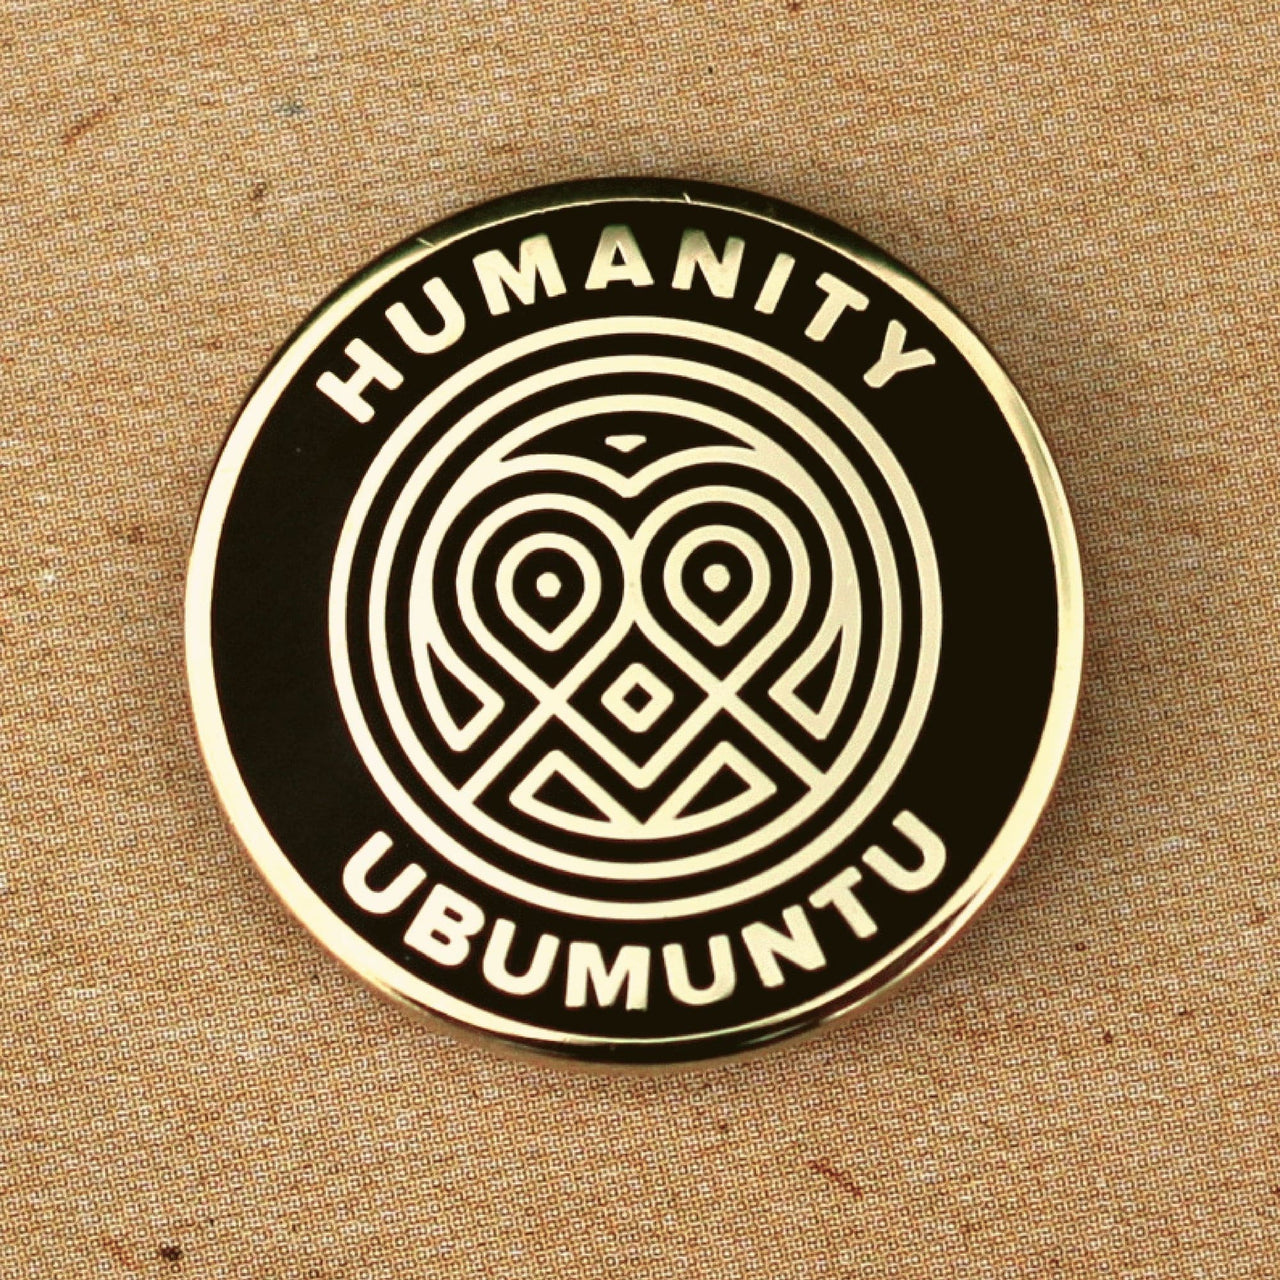 Champion Humanity Lapel Pin Badge.